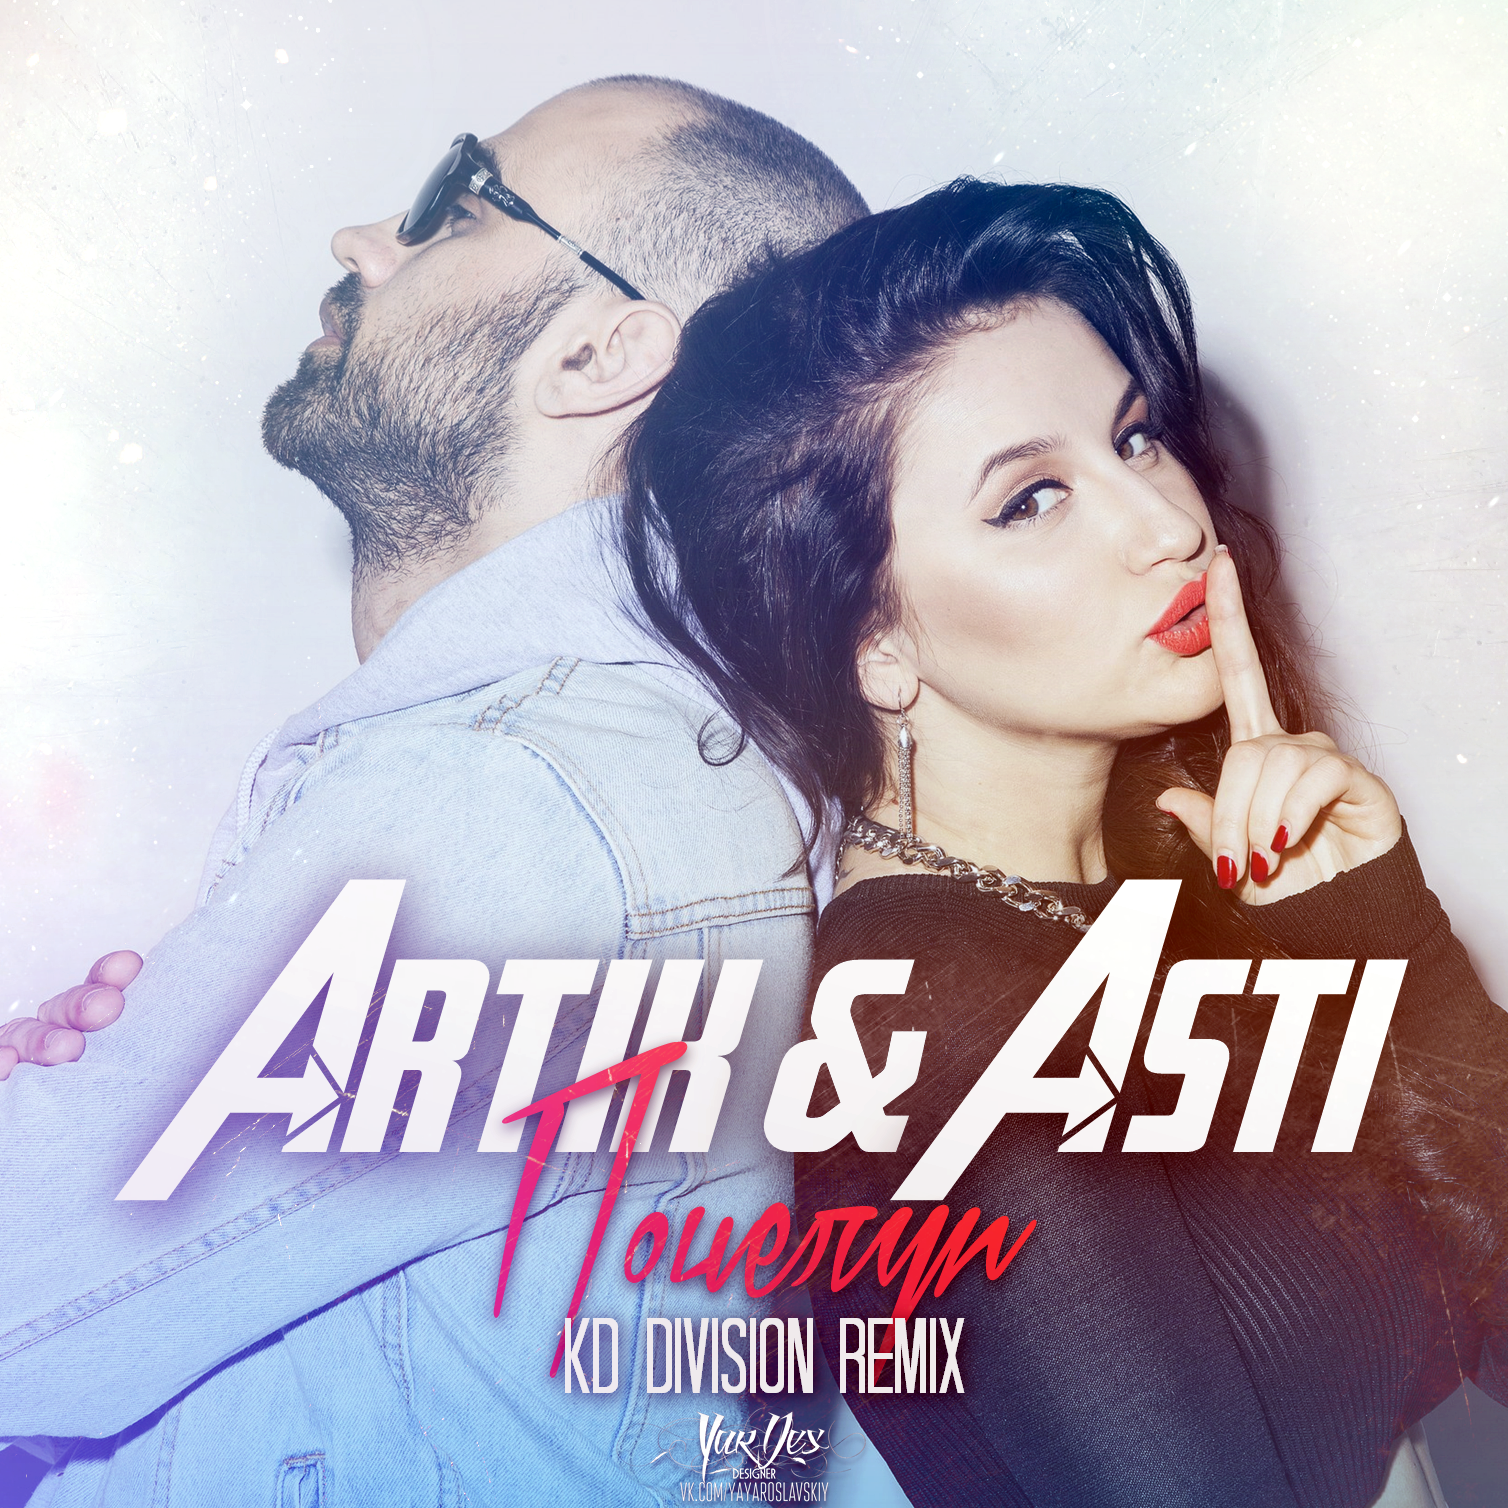 Артик знаешь. Группа artik & Asti. Группа artik & Asti альбомы. Artik Asti обложка. Артик и Асти 2015 год.